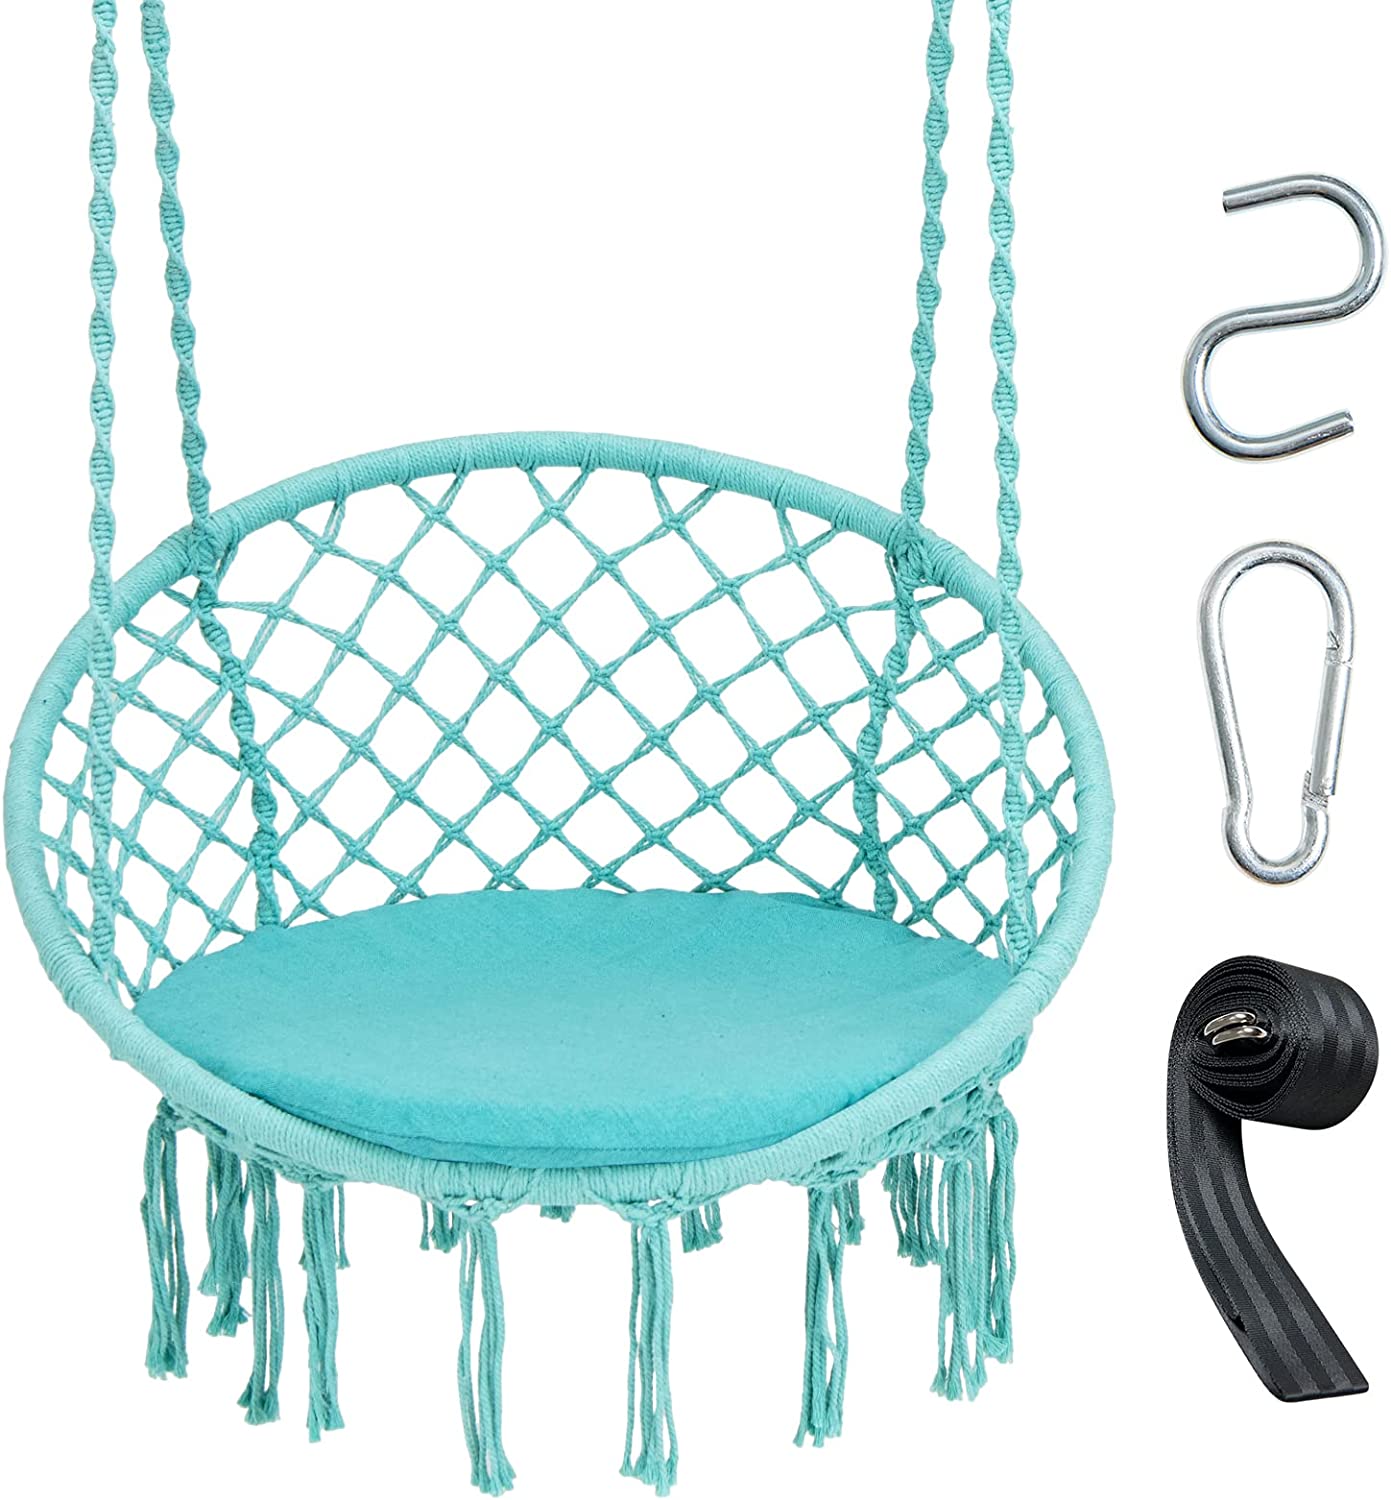 Hammock Chair Macrame Swing, Turquoise - Giantex